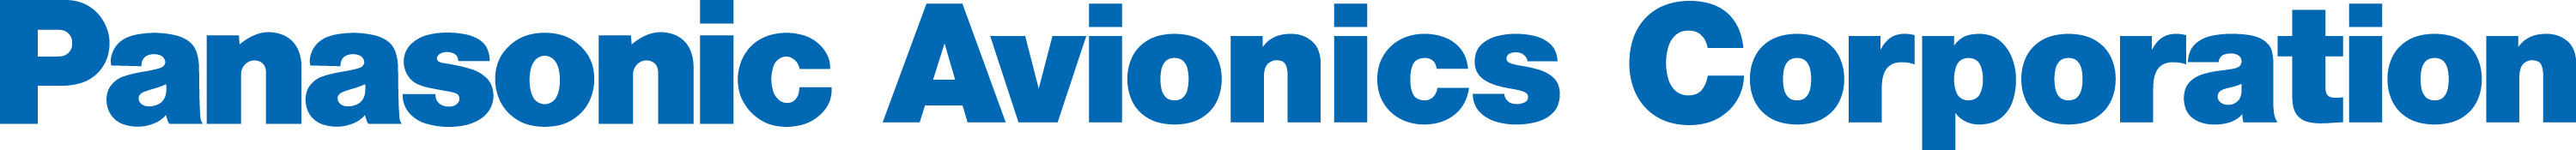 Panasonic Avionics Corporation Logo